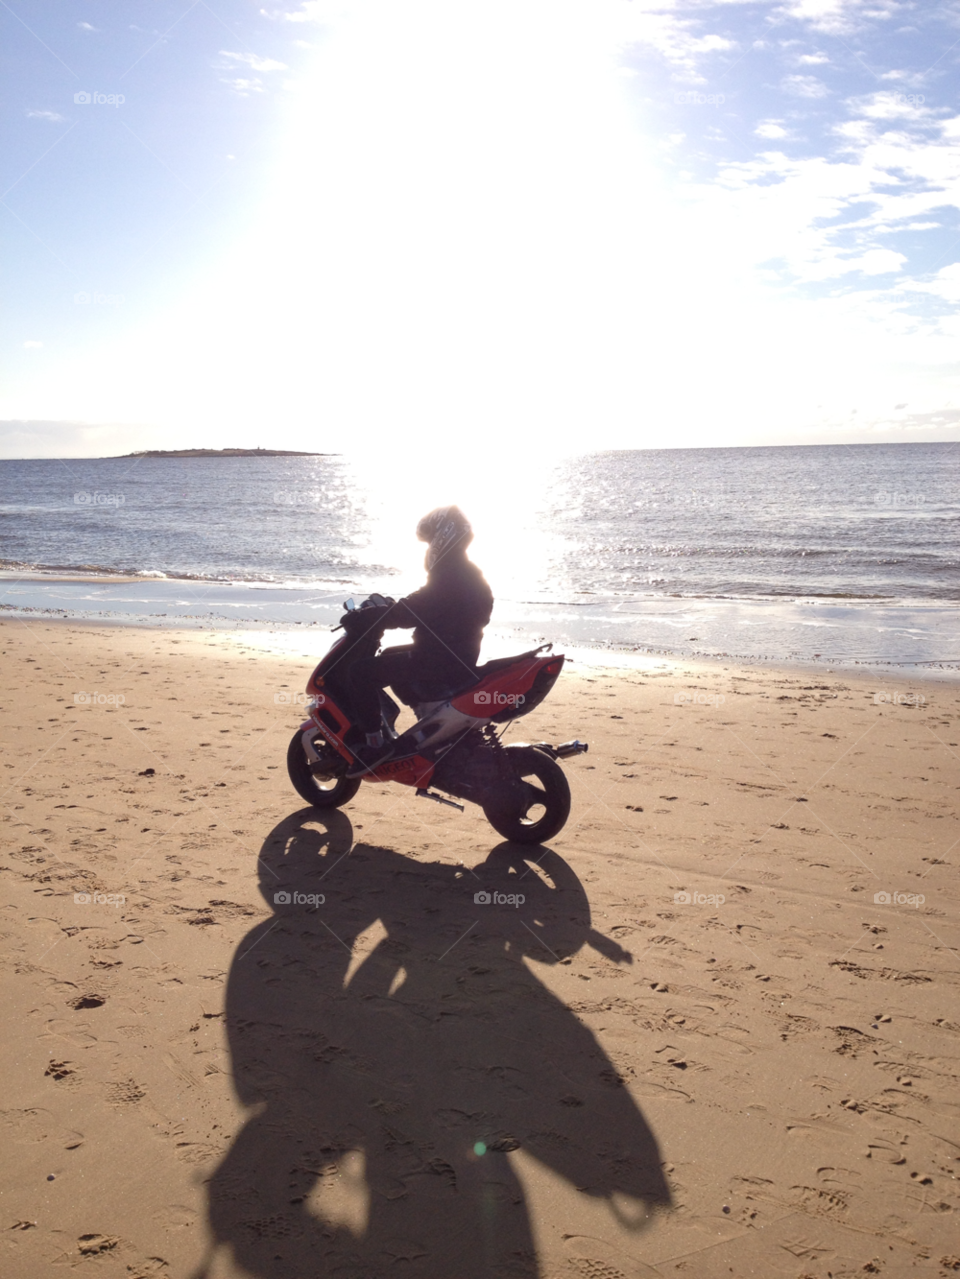 beach halmstad moped tylösand by tomtroell